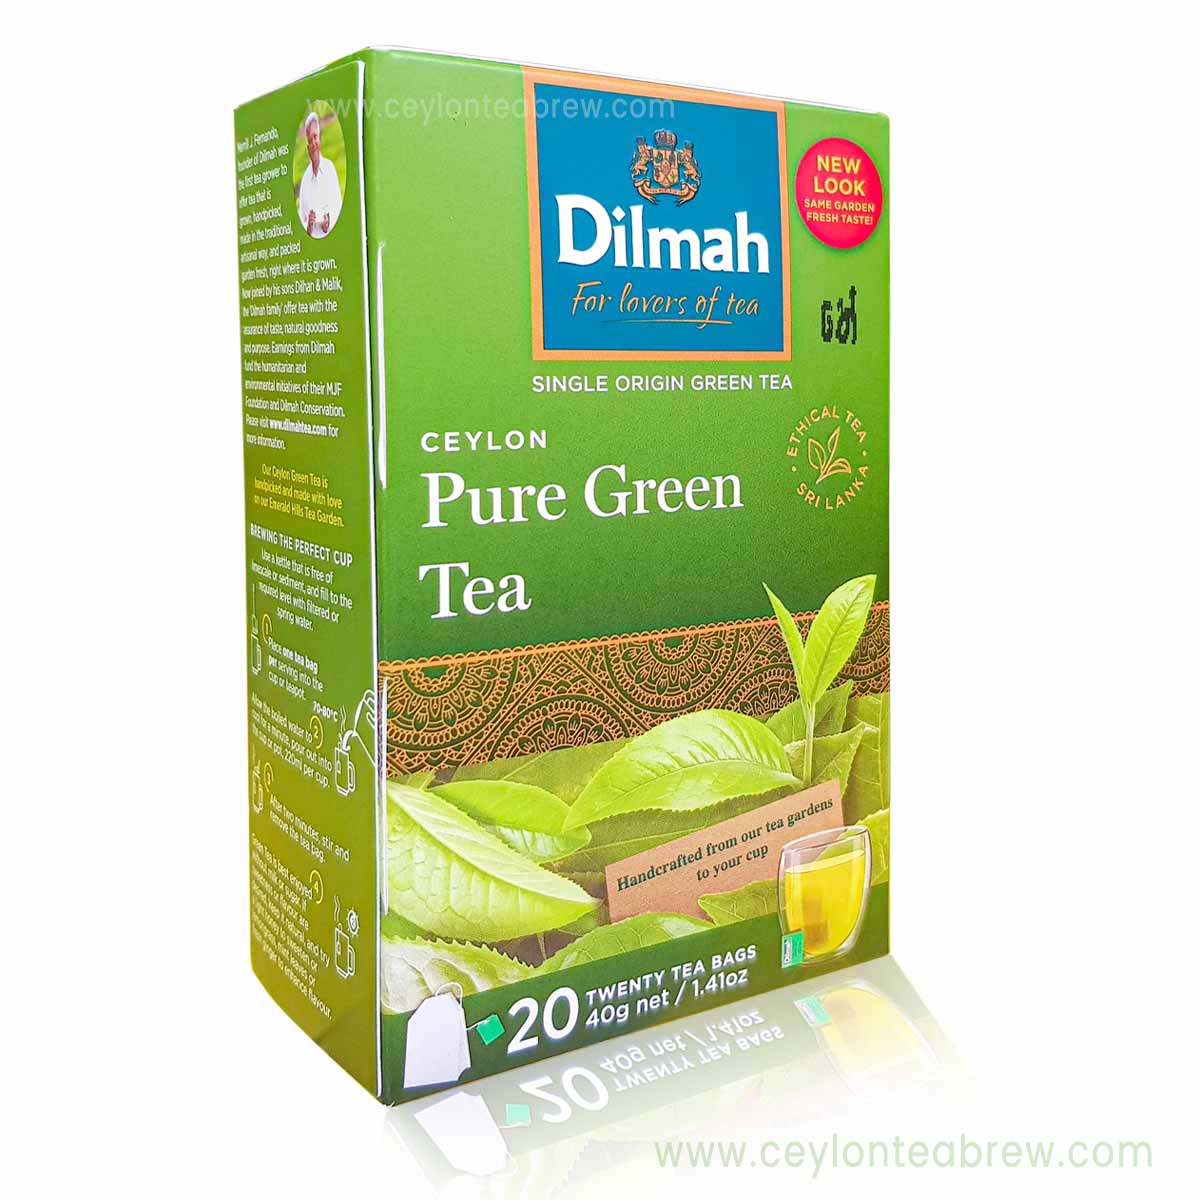 Dilmah Pure Ceylon Green Tea bags 1